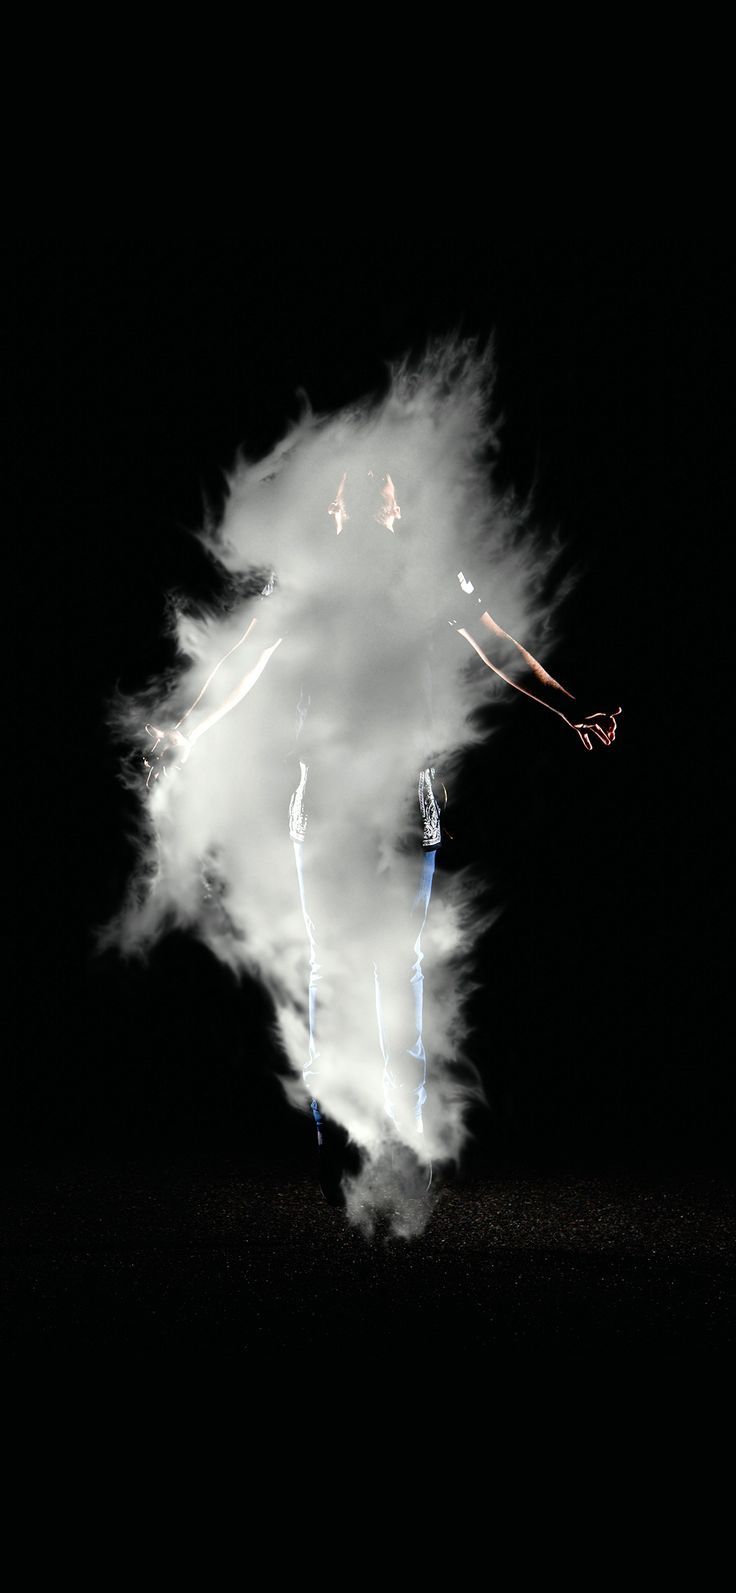 iPhone X wallpaper, man dark smoke illustration art black